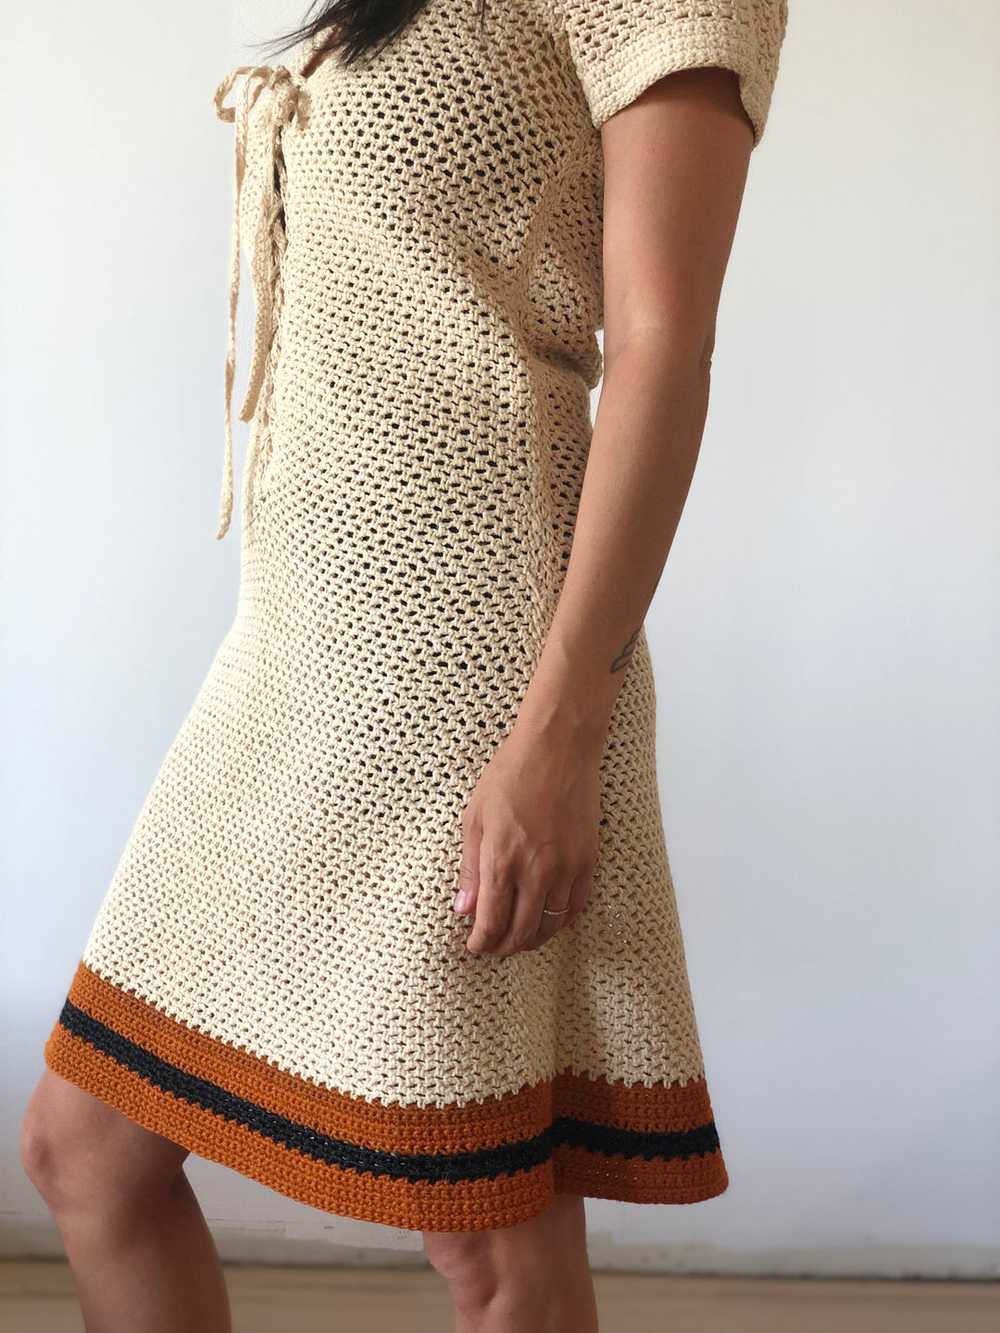 Couture 70s crochet dress - image 1